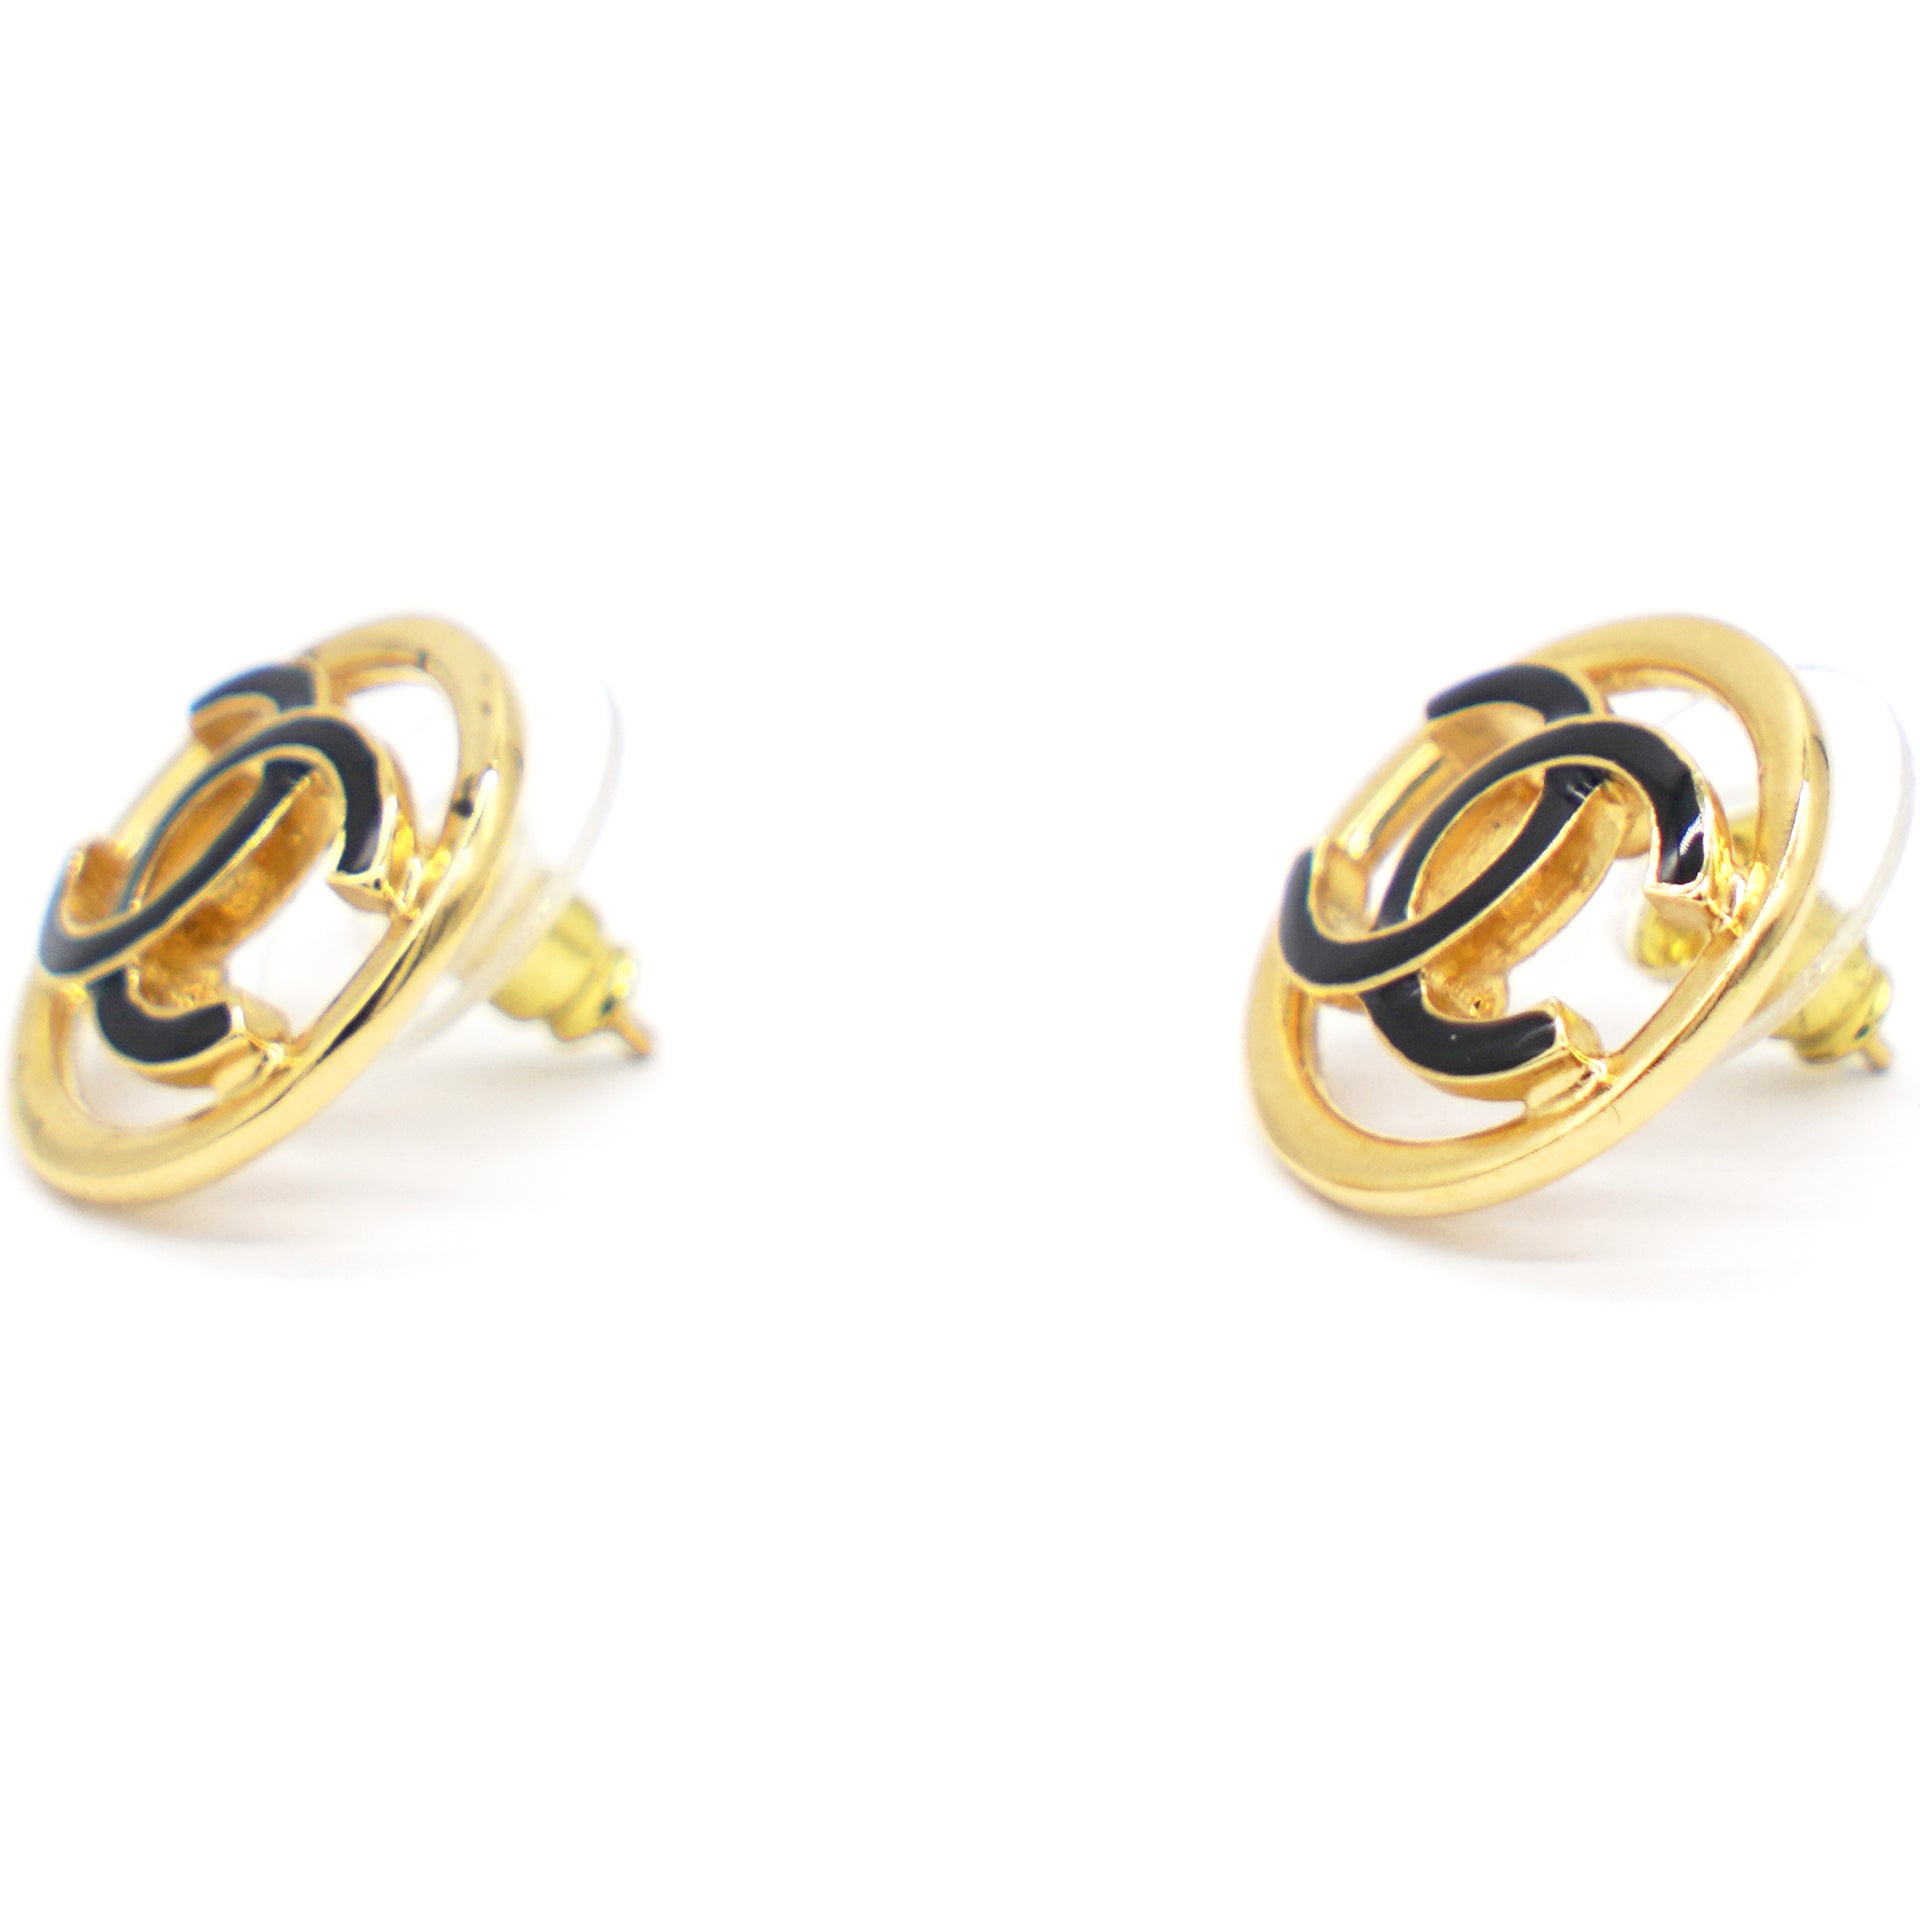 CC Chain Gold Tone and Black Stud Earrings